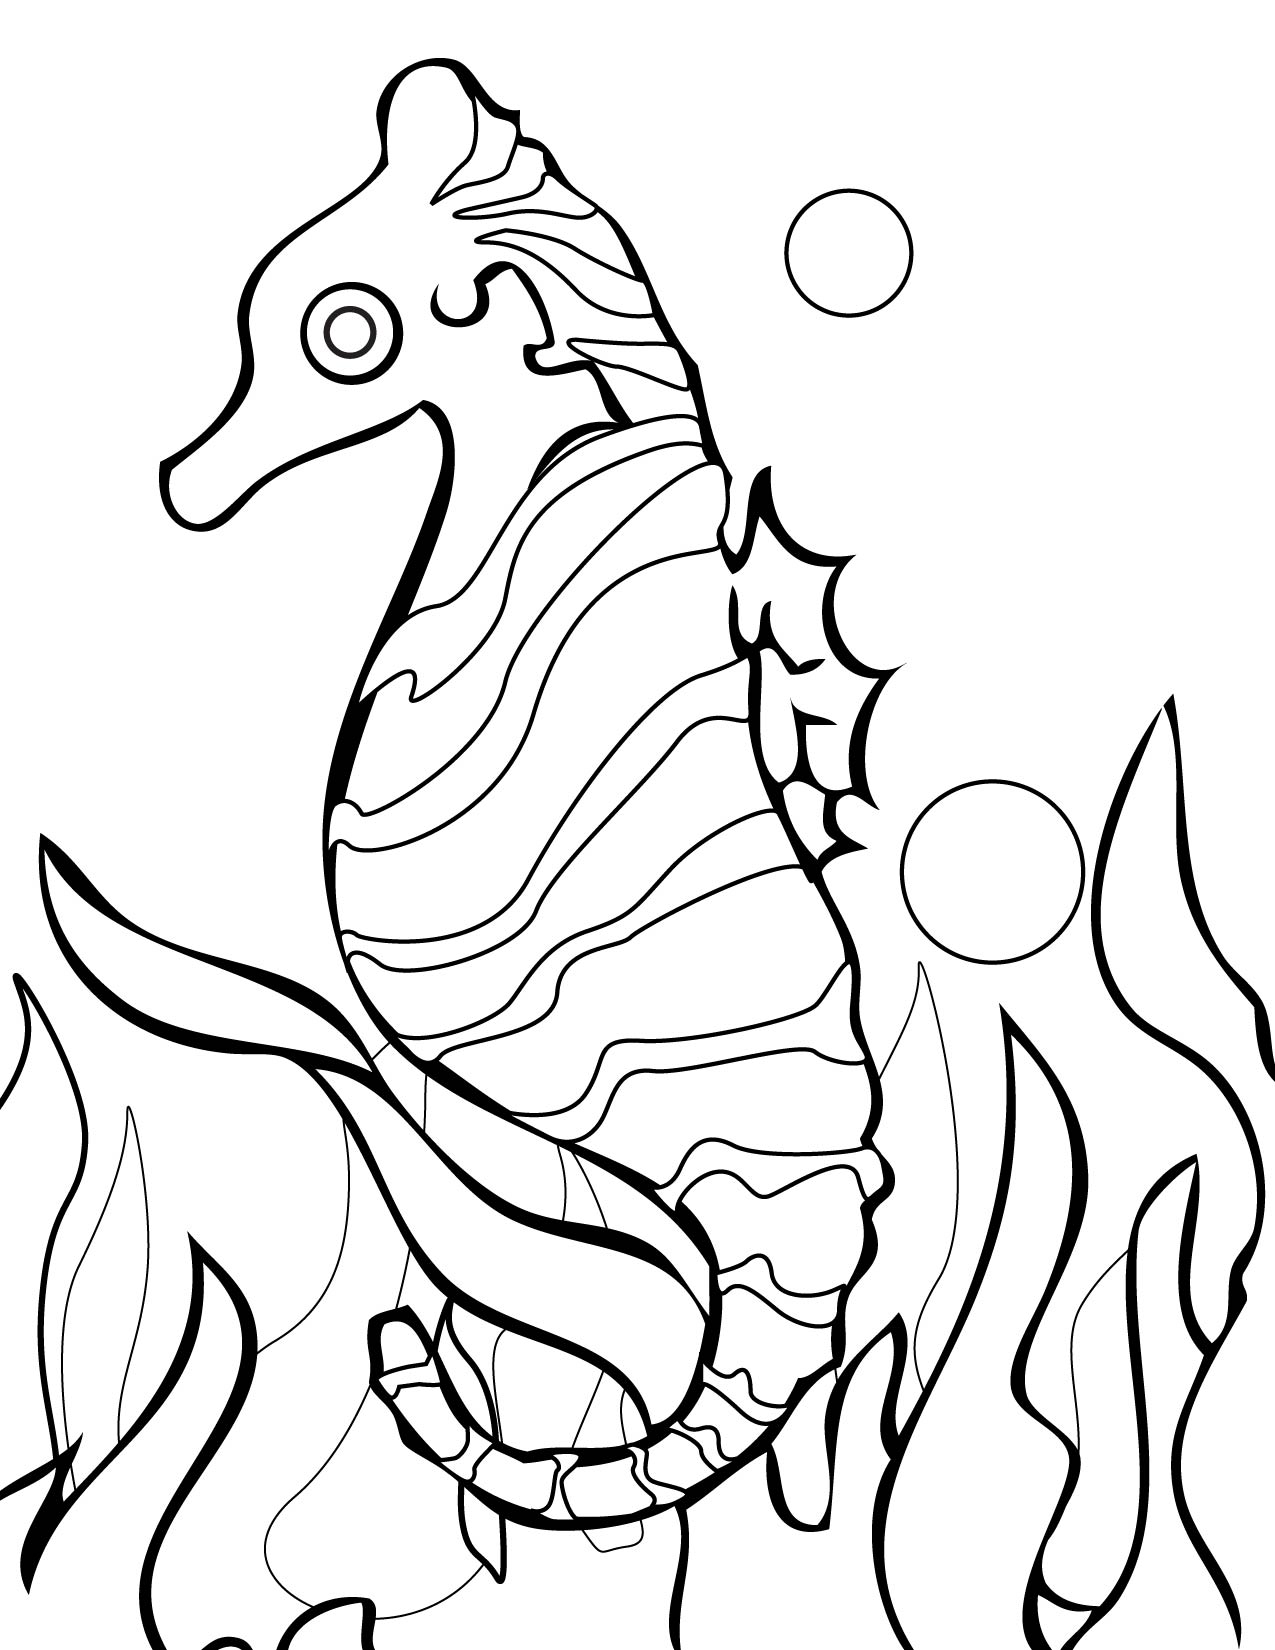 Dwarf Seahorse Coloring Page - Handipoints